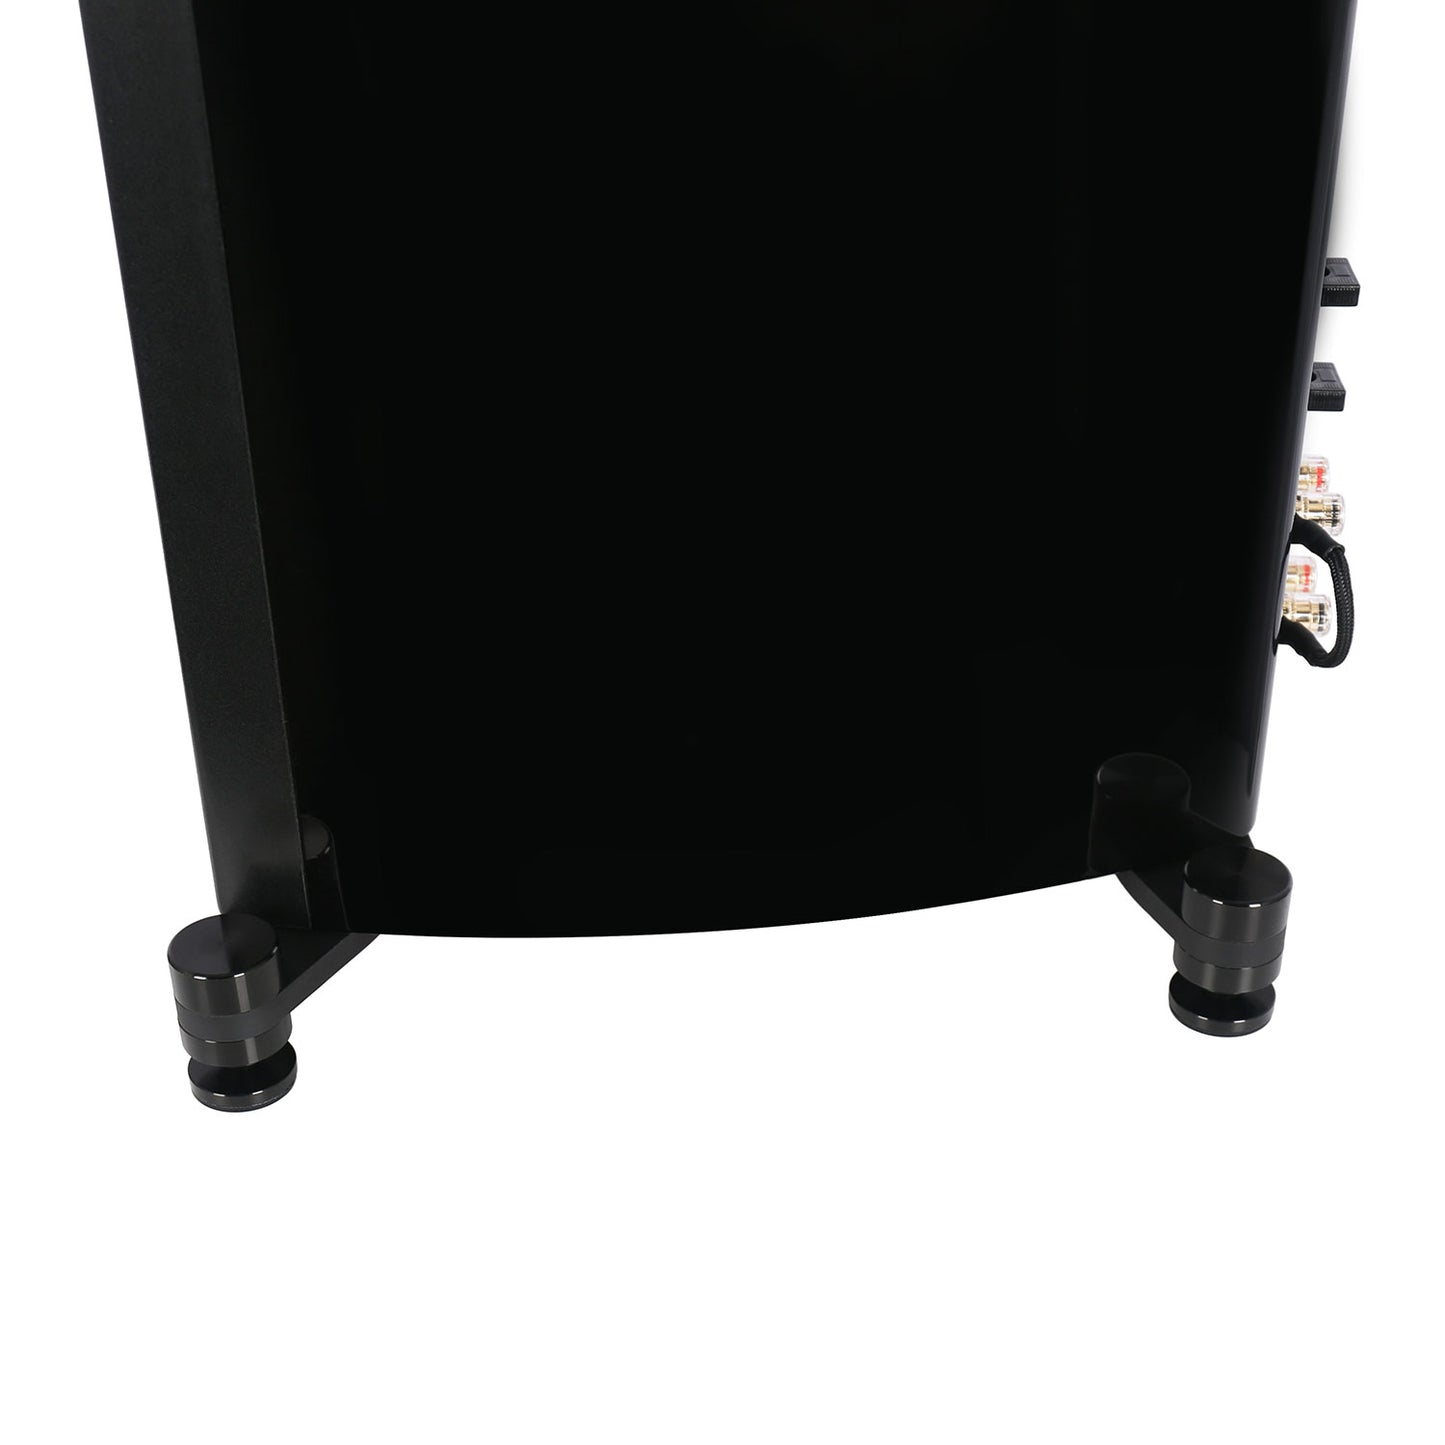 Open Box Verus V8T 3-Way Dual 8" Tower Speaker Single - Gloss Black